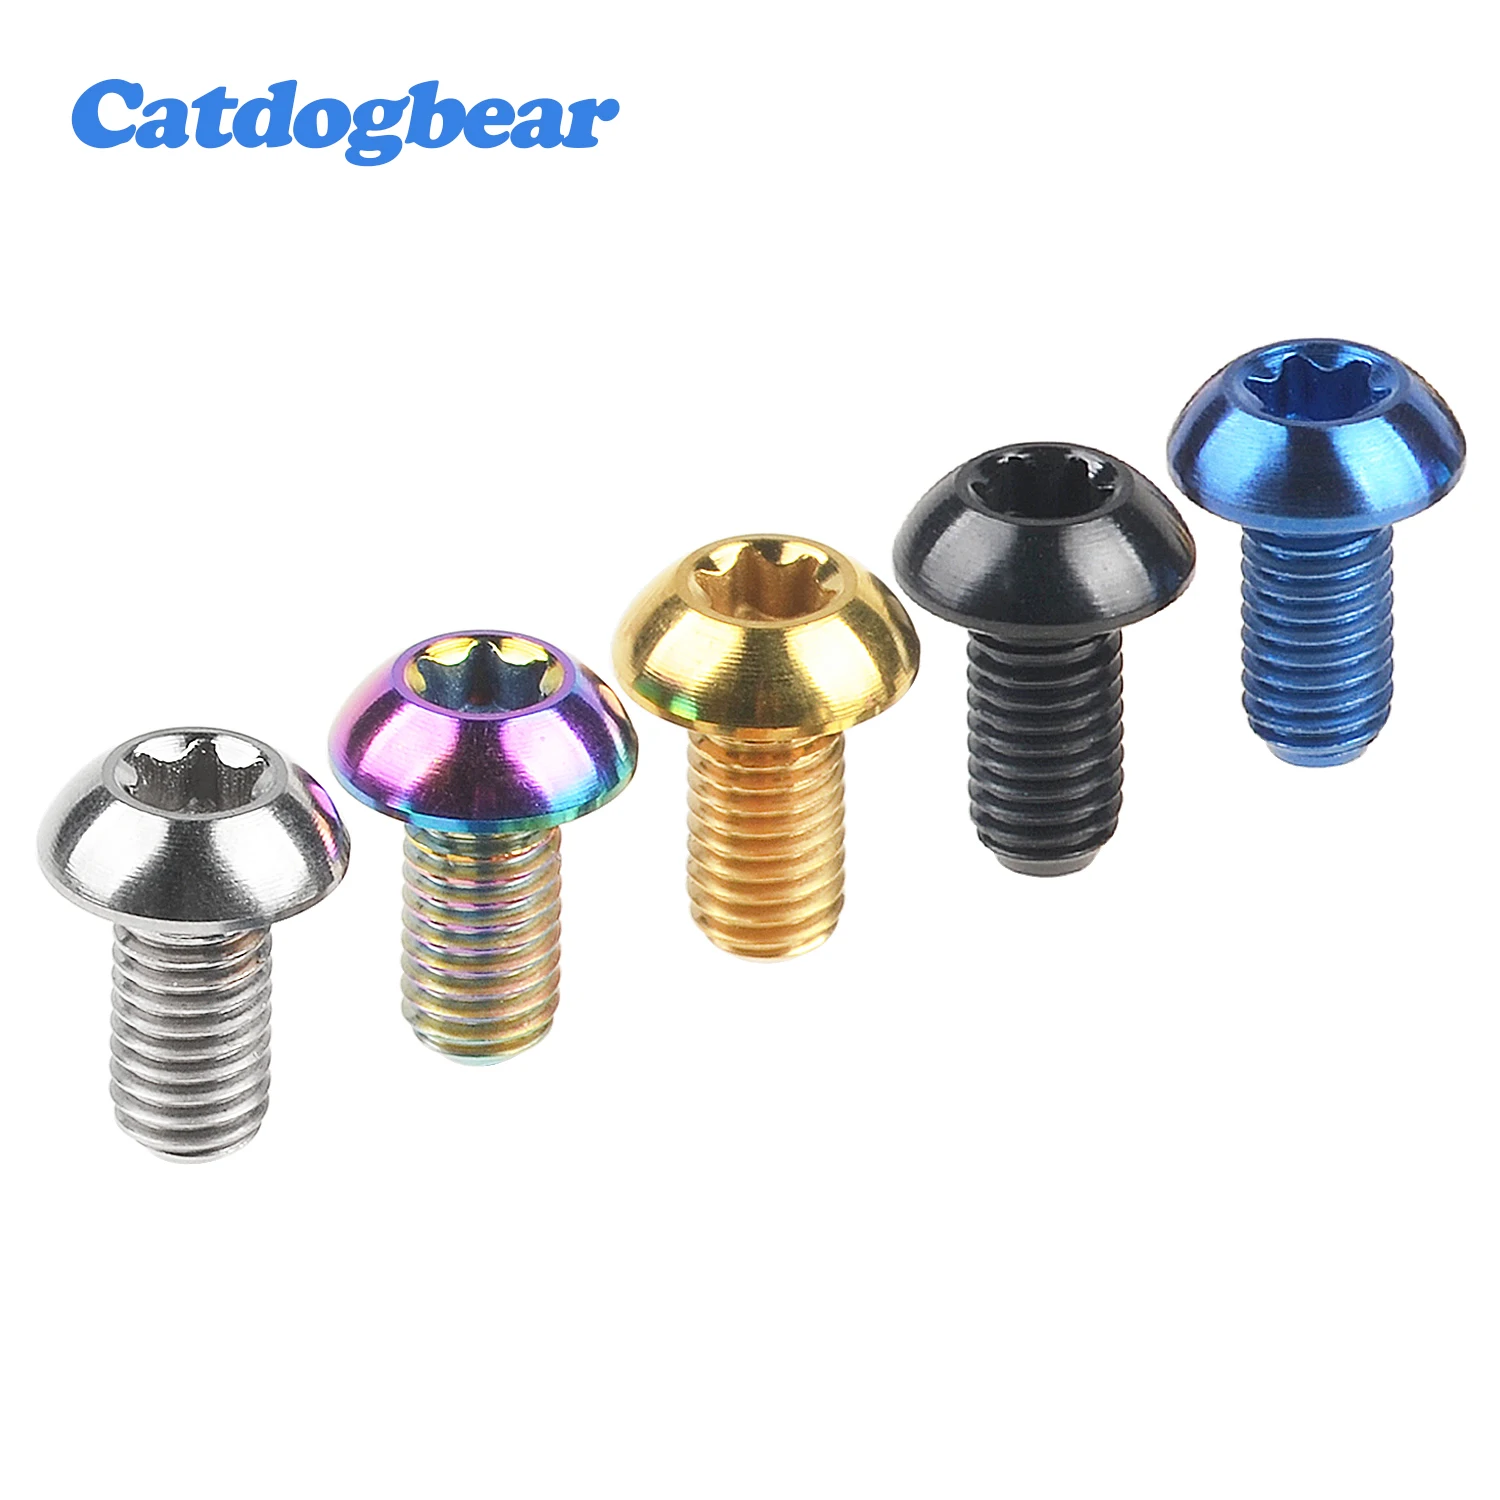 Catdogbear-tornillos de titanio de 4 piezas, M5x10m, 12mm, para rotores de freno de disco, bicicleta de montaña y carretera, T25, cabeza Torx, dis